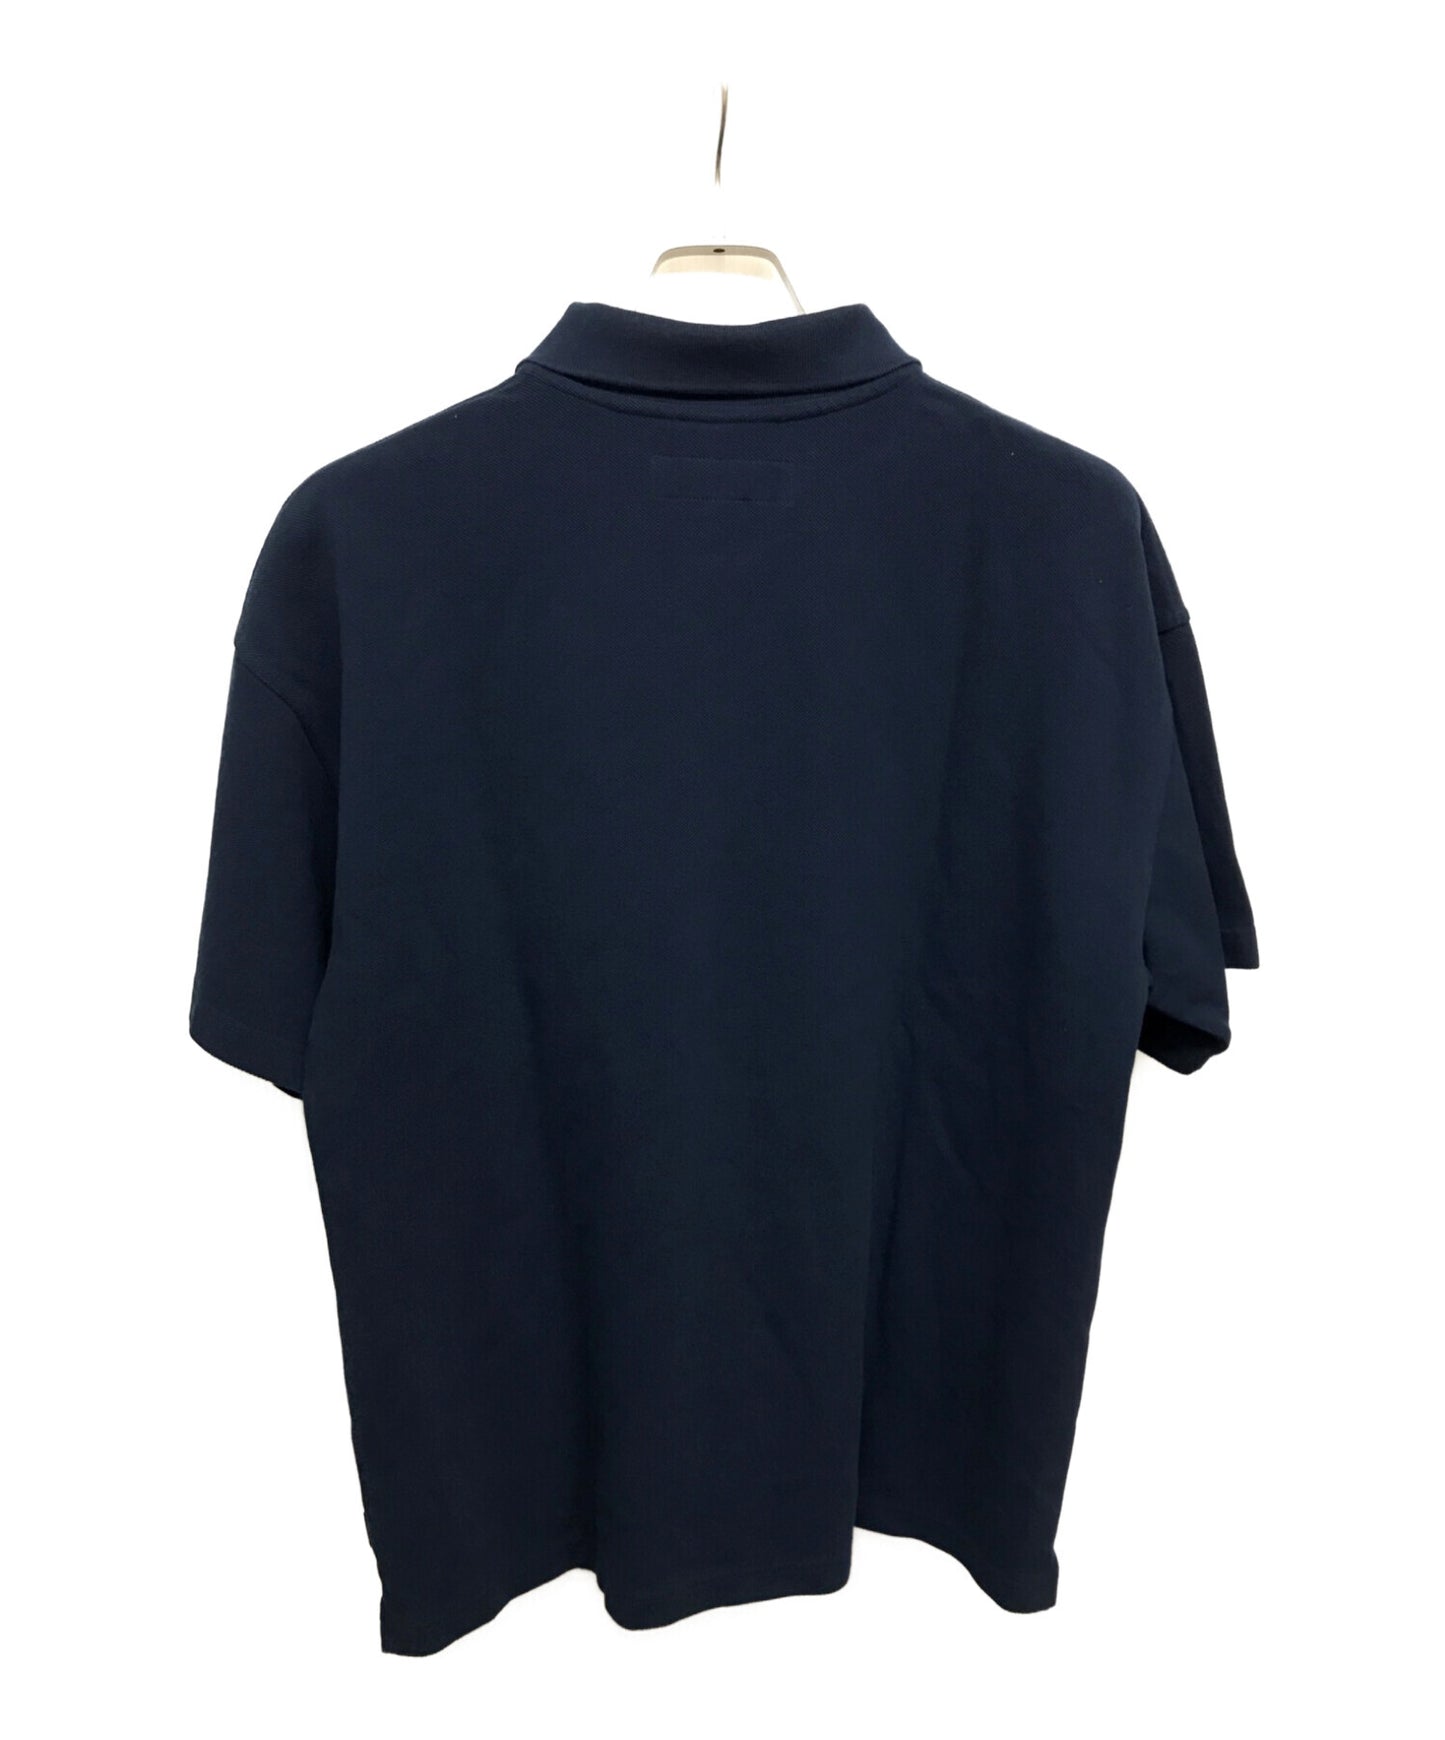 [Pre-owned] NEIGHBORHOOD 22SS Classic Deer polo shirt short sleeve 221UWNH-CSM01